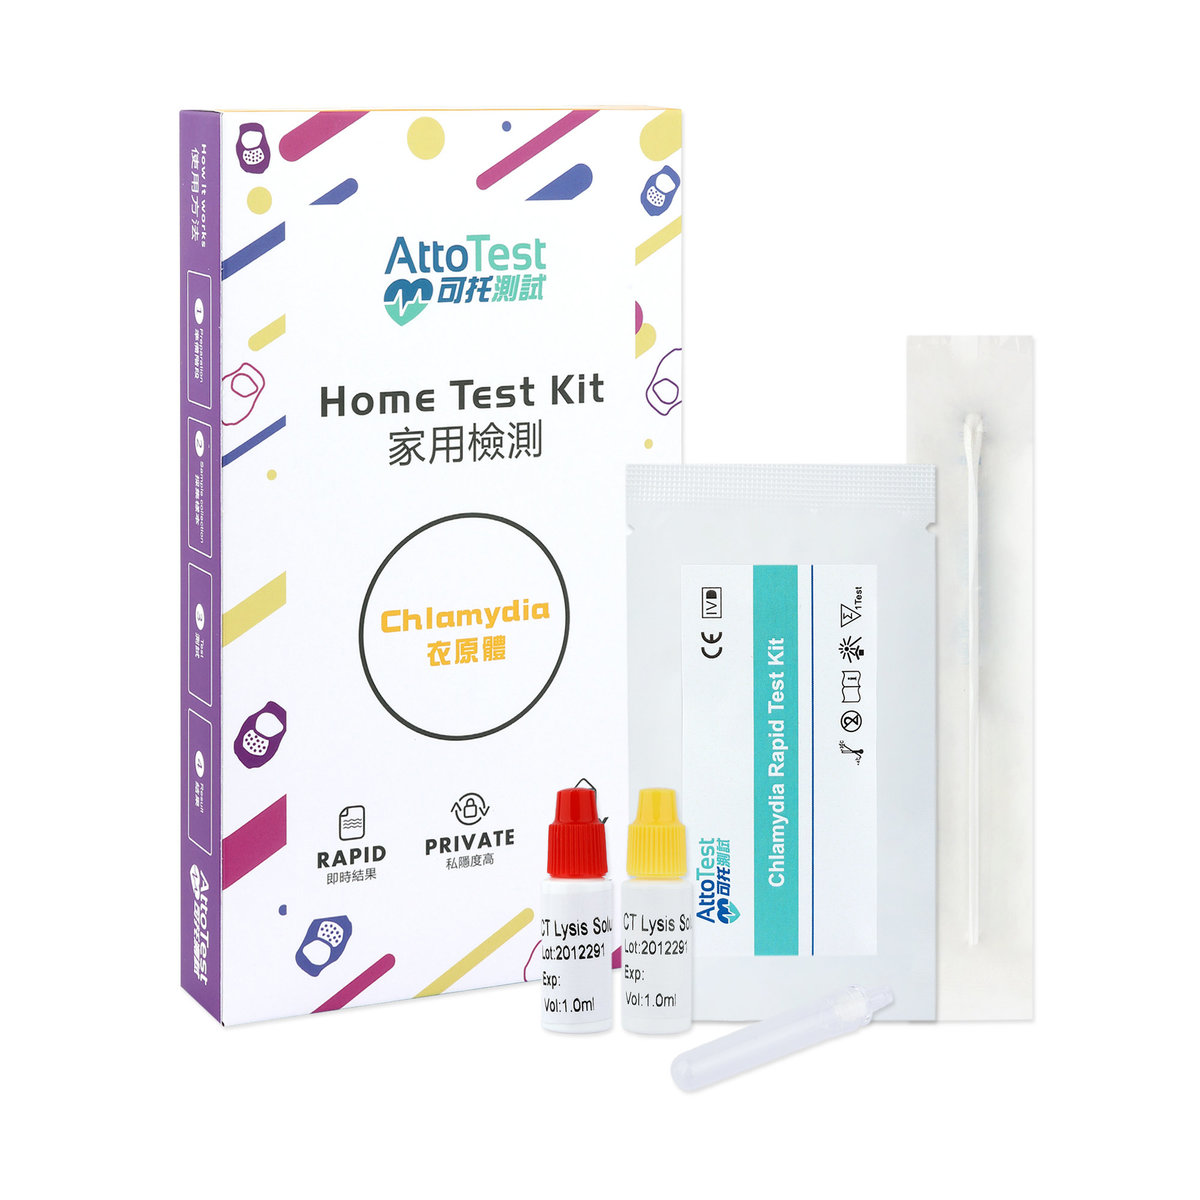 AttoTest® Chlamydia (Home Rapid Test)